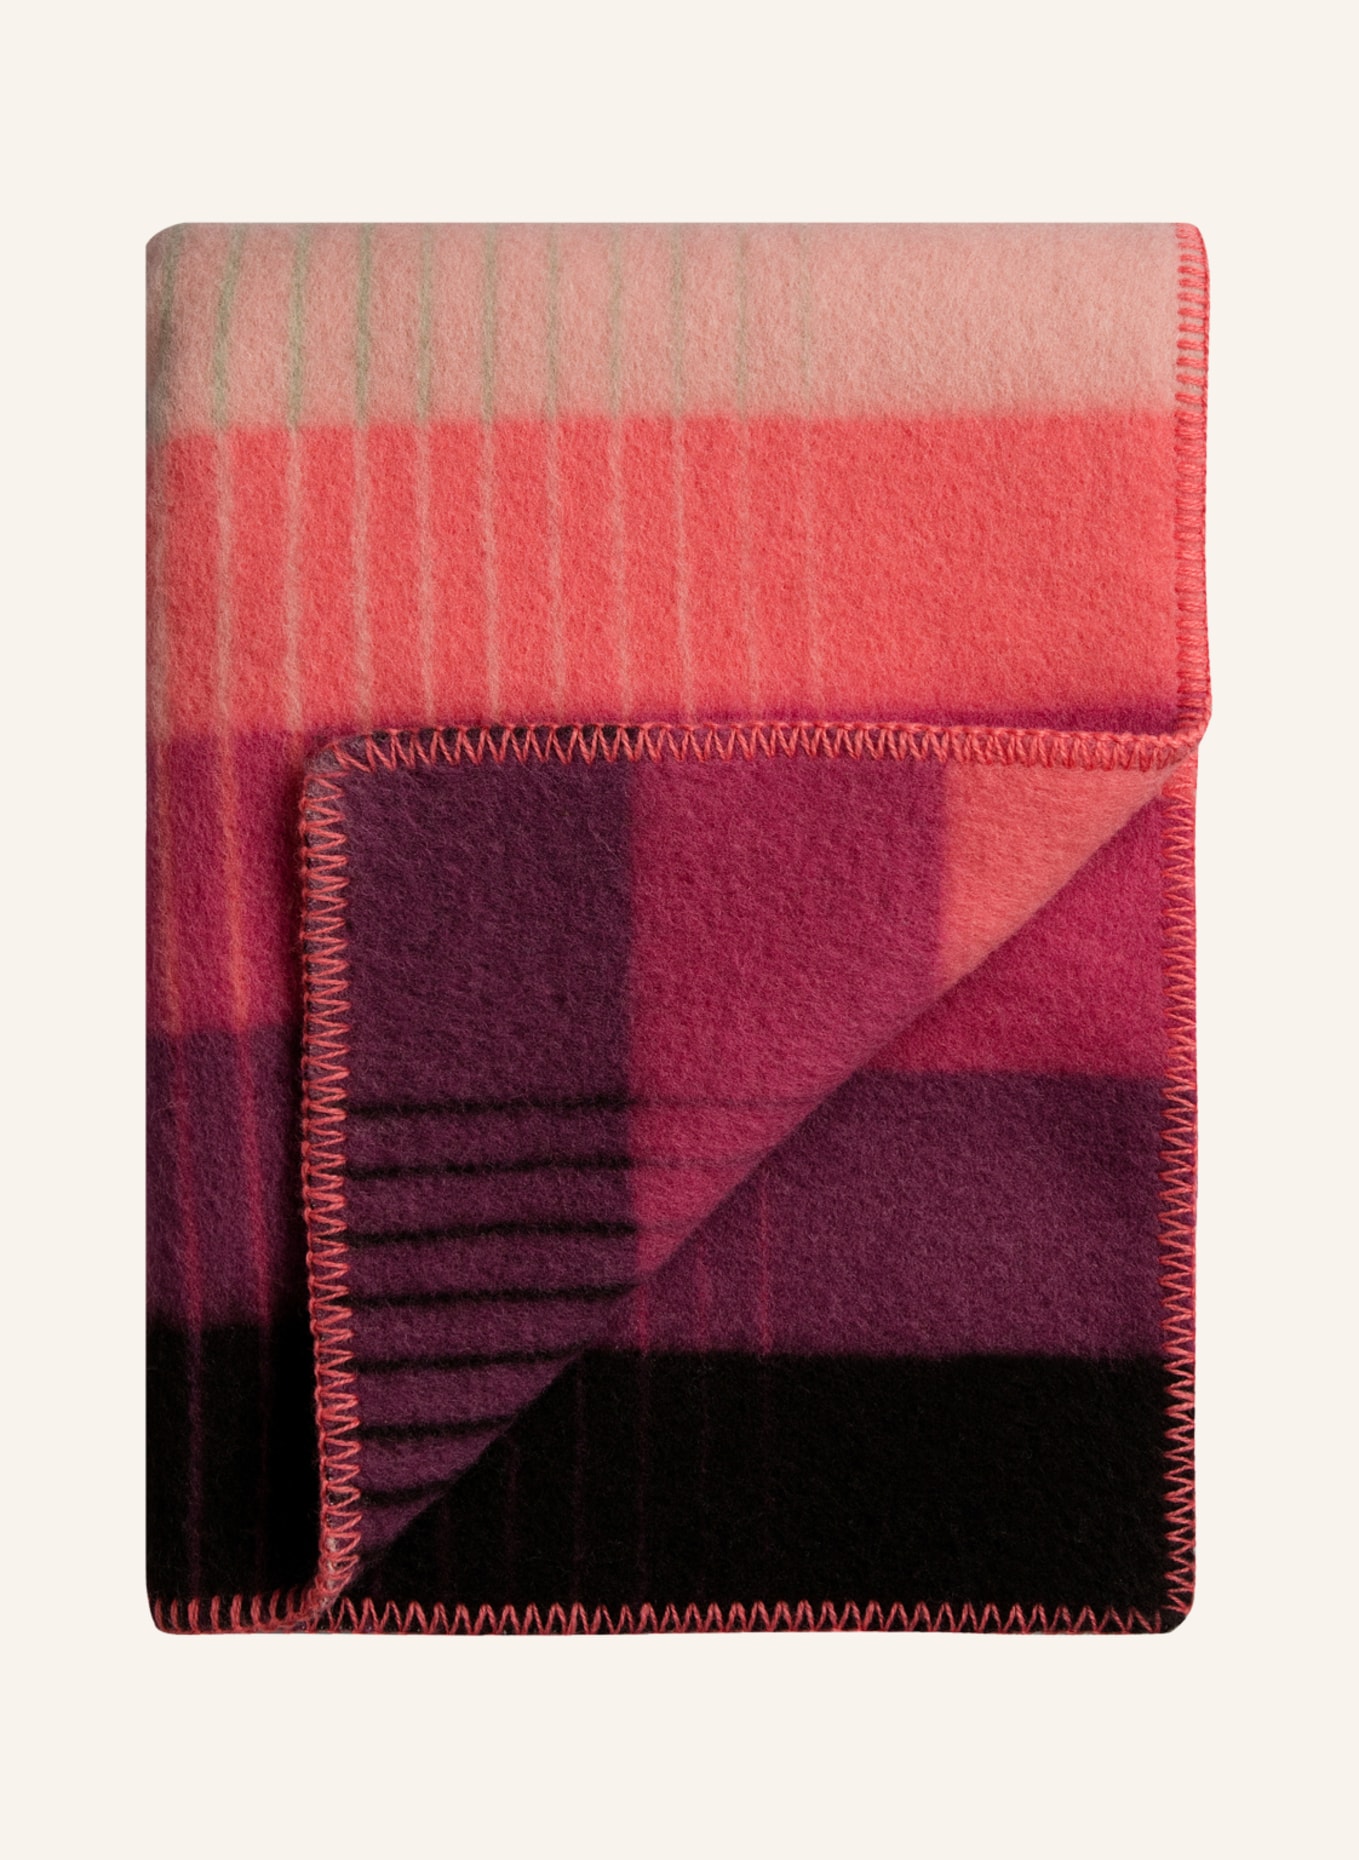 Røros Tweed Tweed-Plaid ÅSMUND, Farbe: DUNKELROT/ HELLROT/ GRÜN (Bild 1)